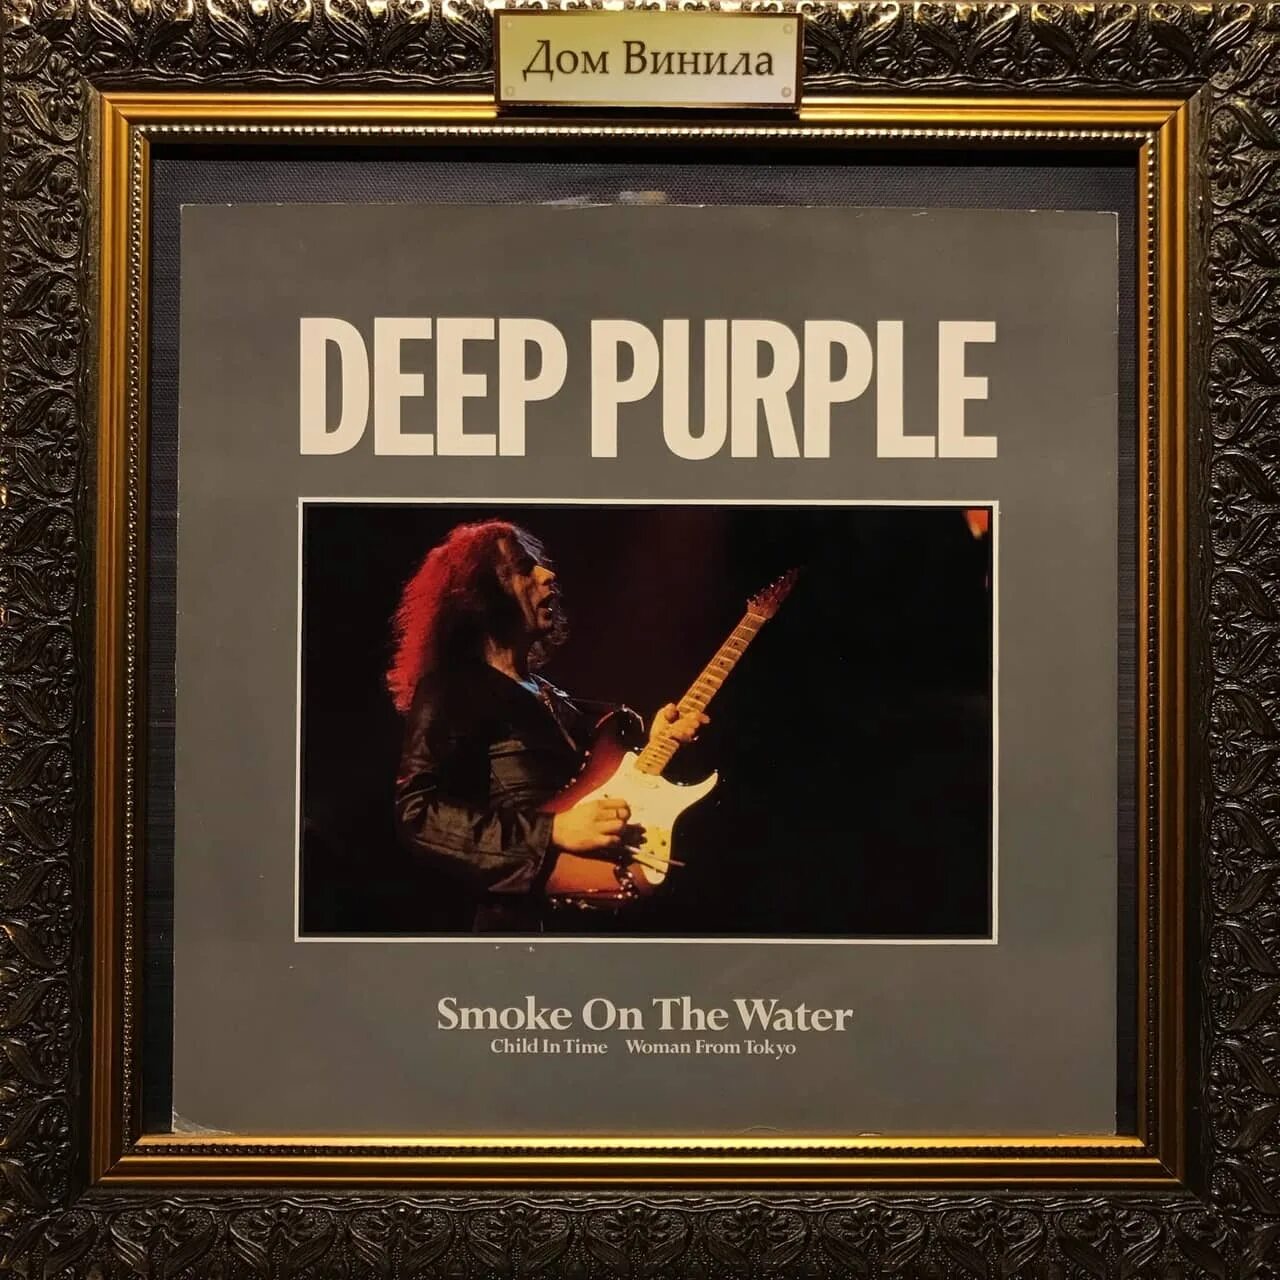 Deep Purple 1985. Deep Purple child in time обложка. Виниловая пластинка Deep Purple Smoke. Deep Purple woman from Tokyo. Дитя во времени дип